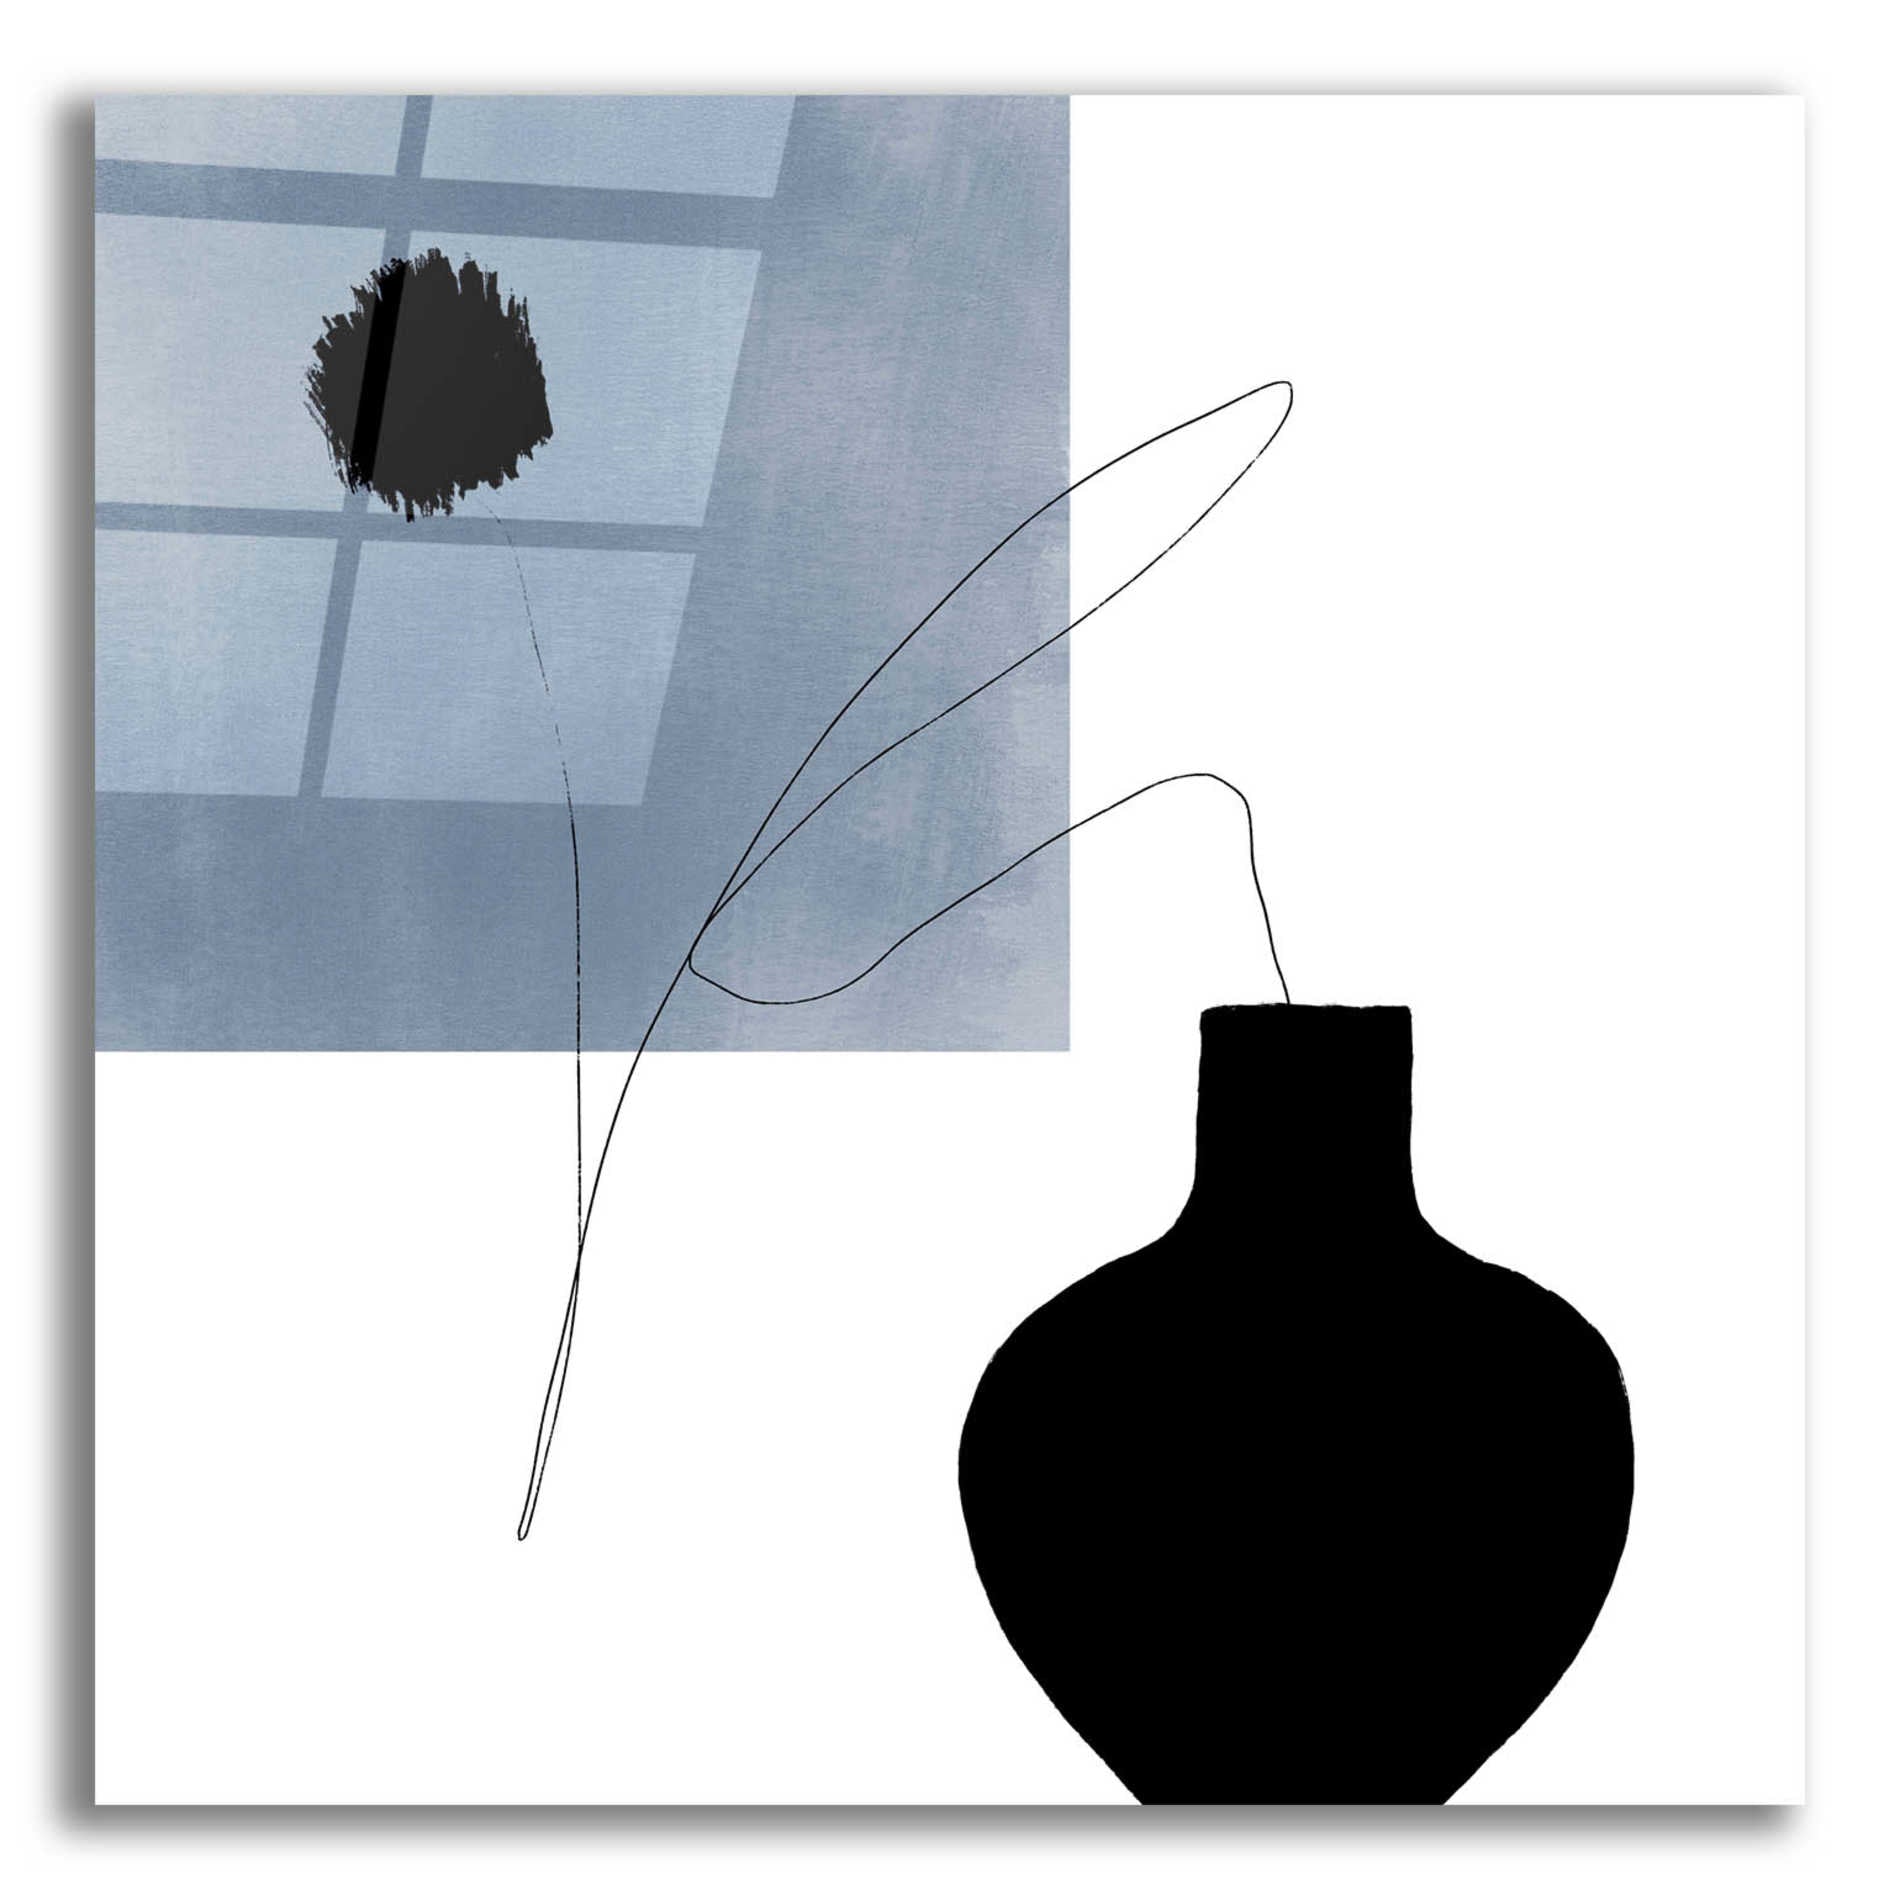 Epic Art 'A Breath of Hair' by Cesare Bellassai, Acrylic Glass Wall Art,12x12x1.1x0,18x18x1.1x0,26x26x1.74x0,37x37x1.74x0